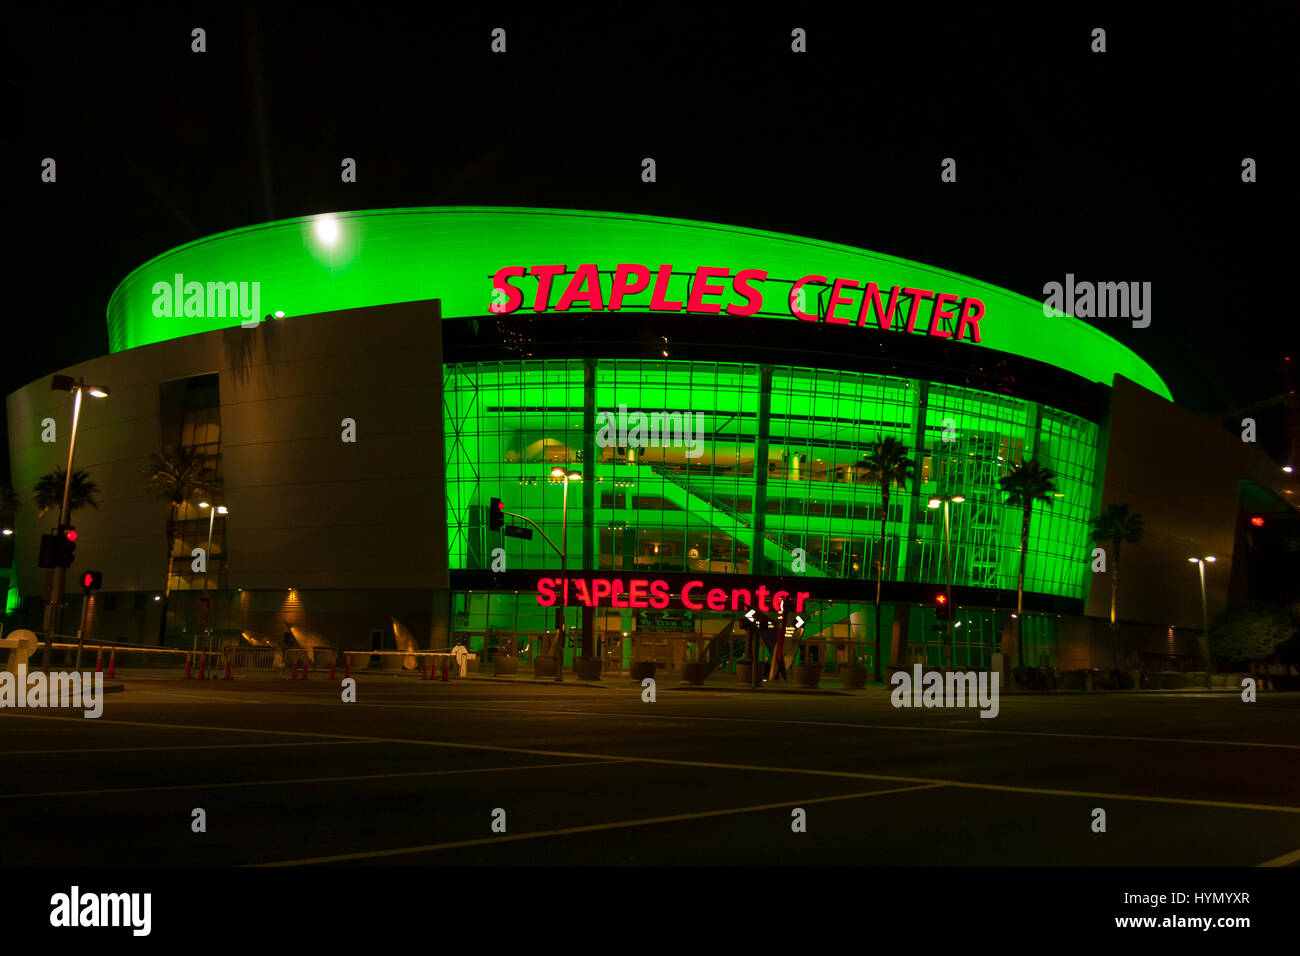 Los Angeles Kings at Crypto.com Arena, aka Staples Center : r